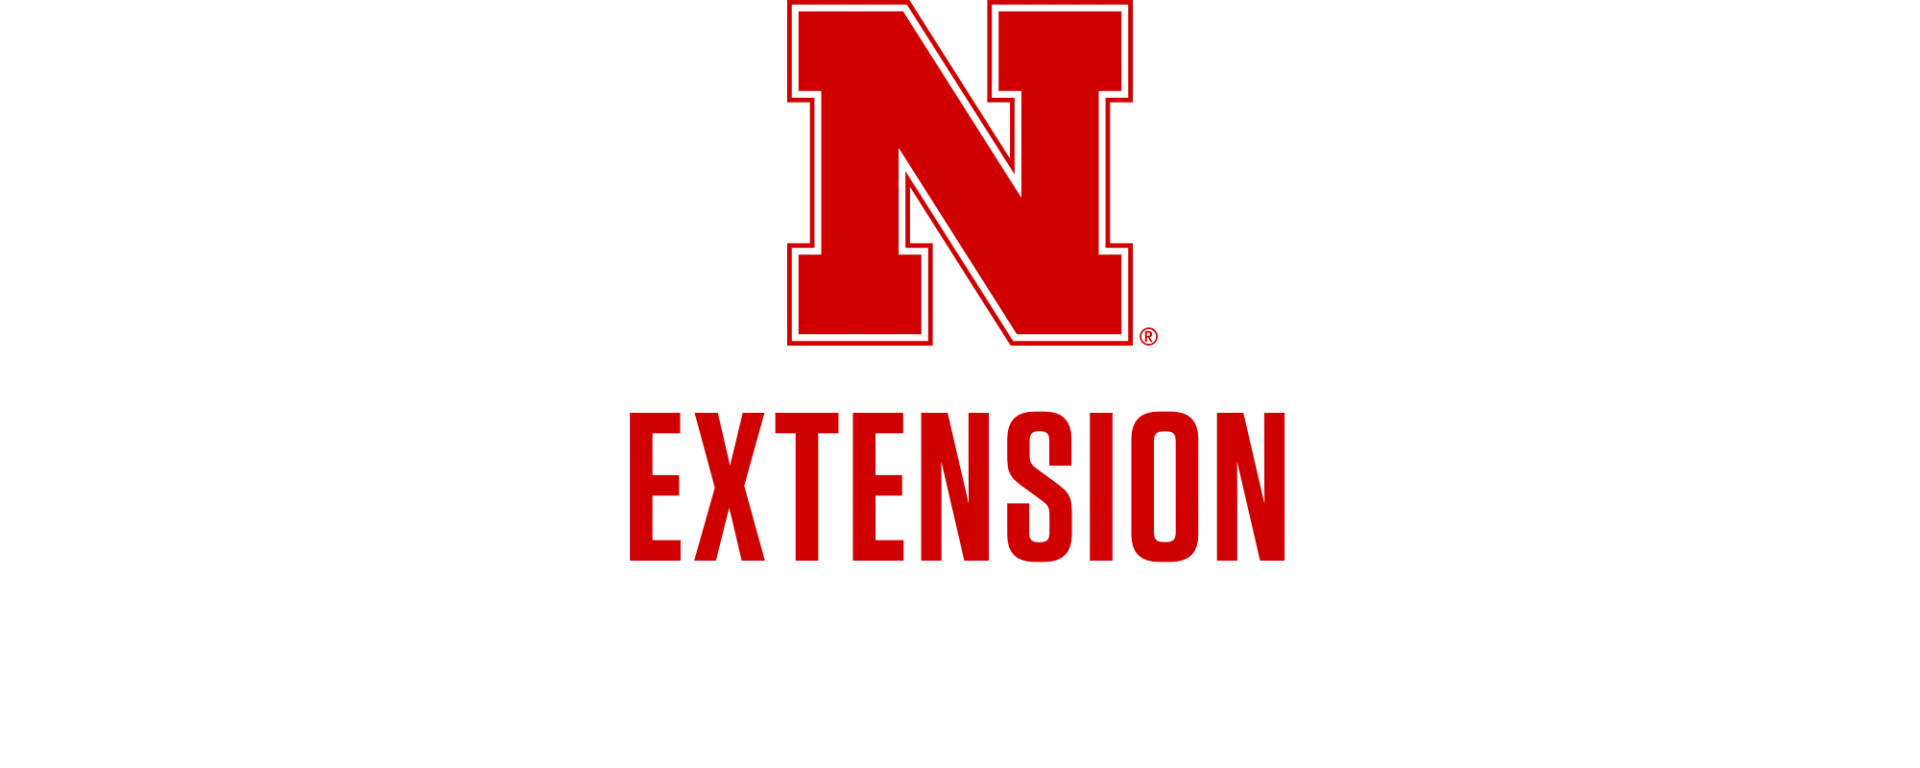 NE extension.png